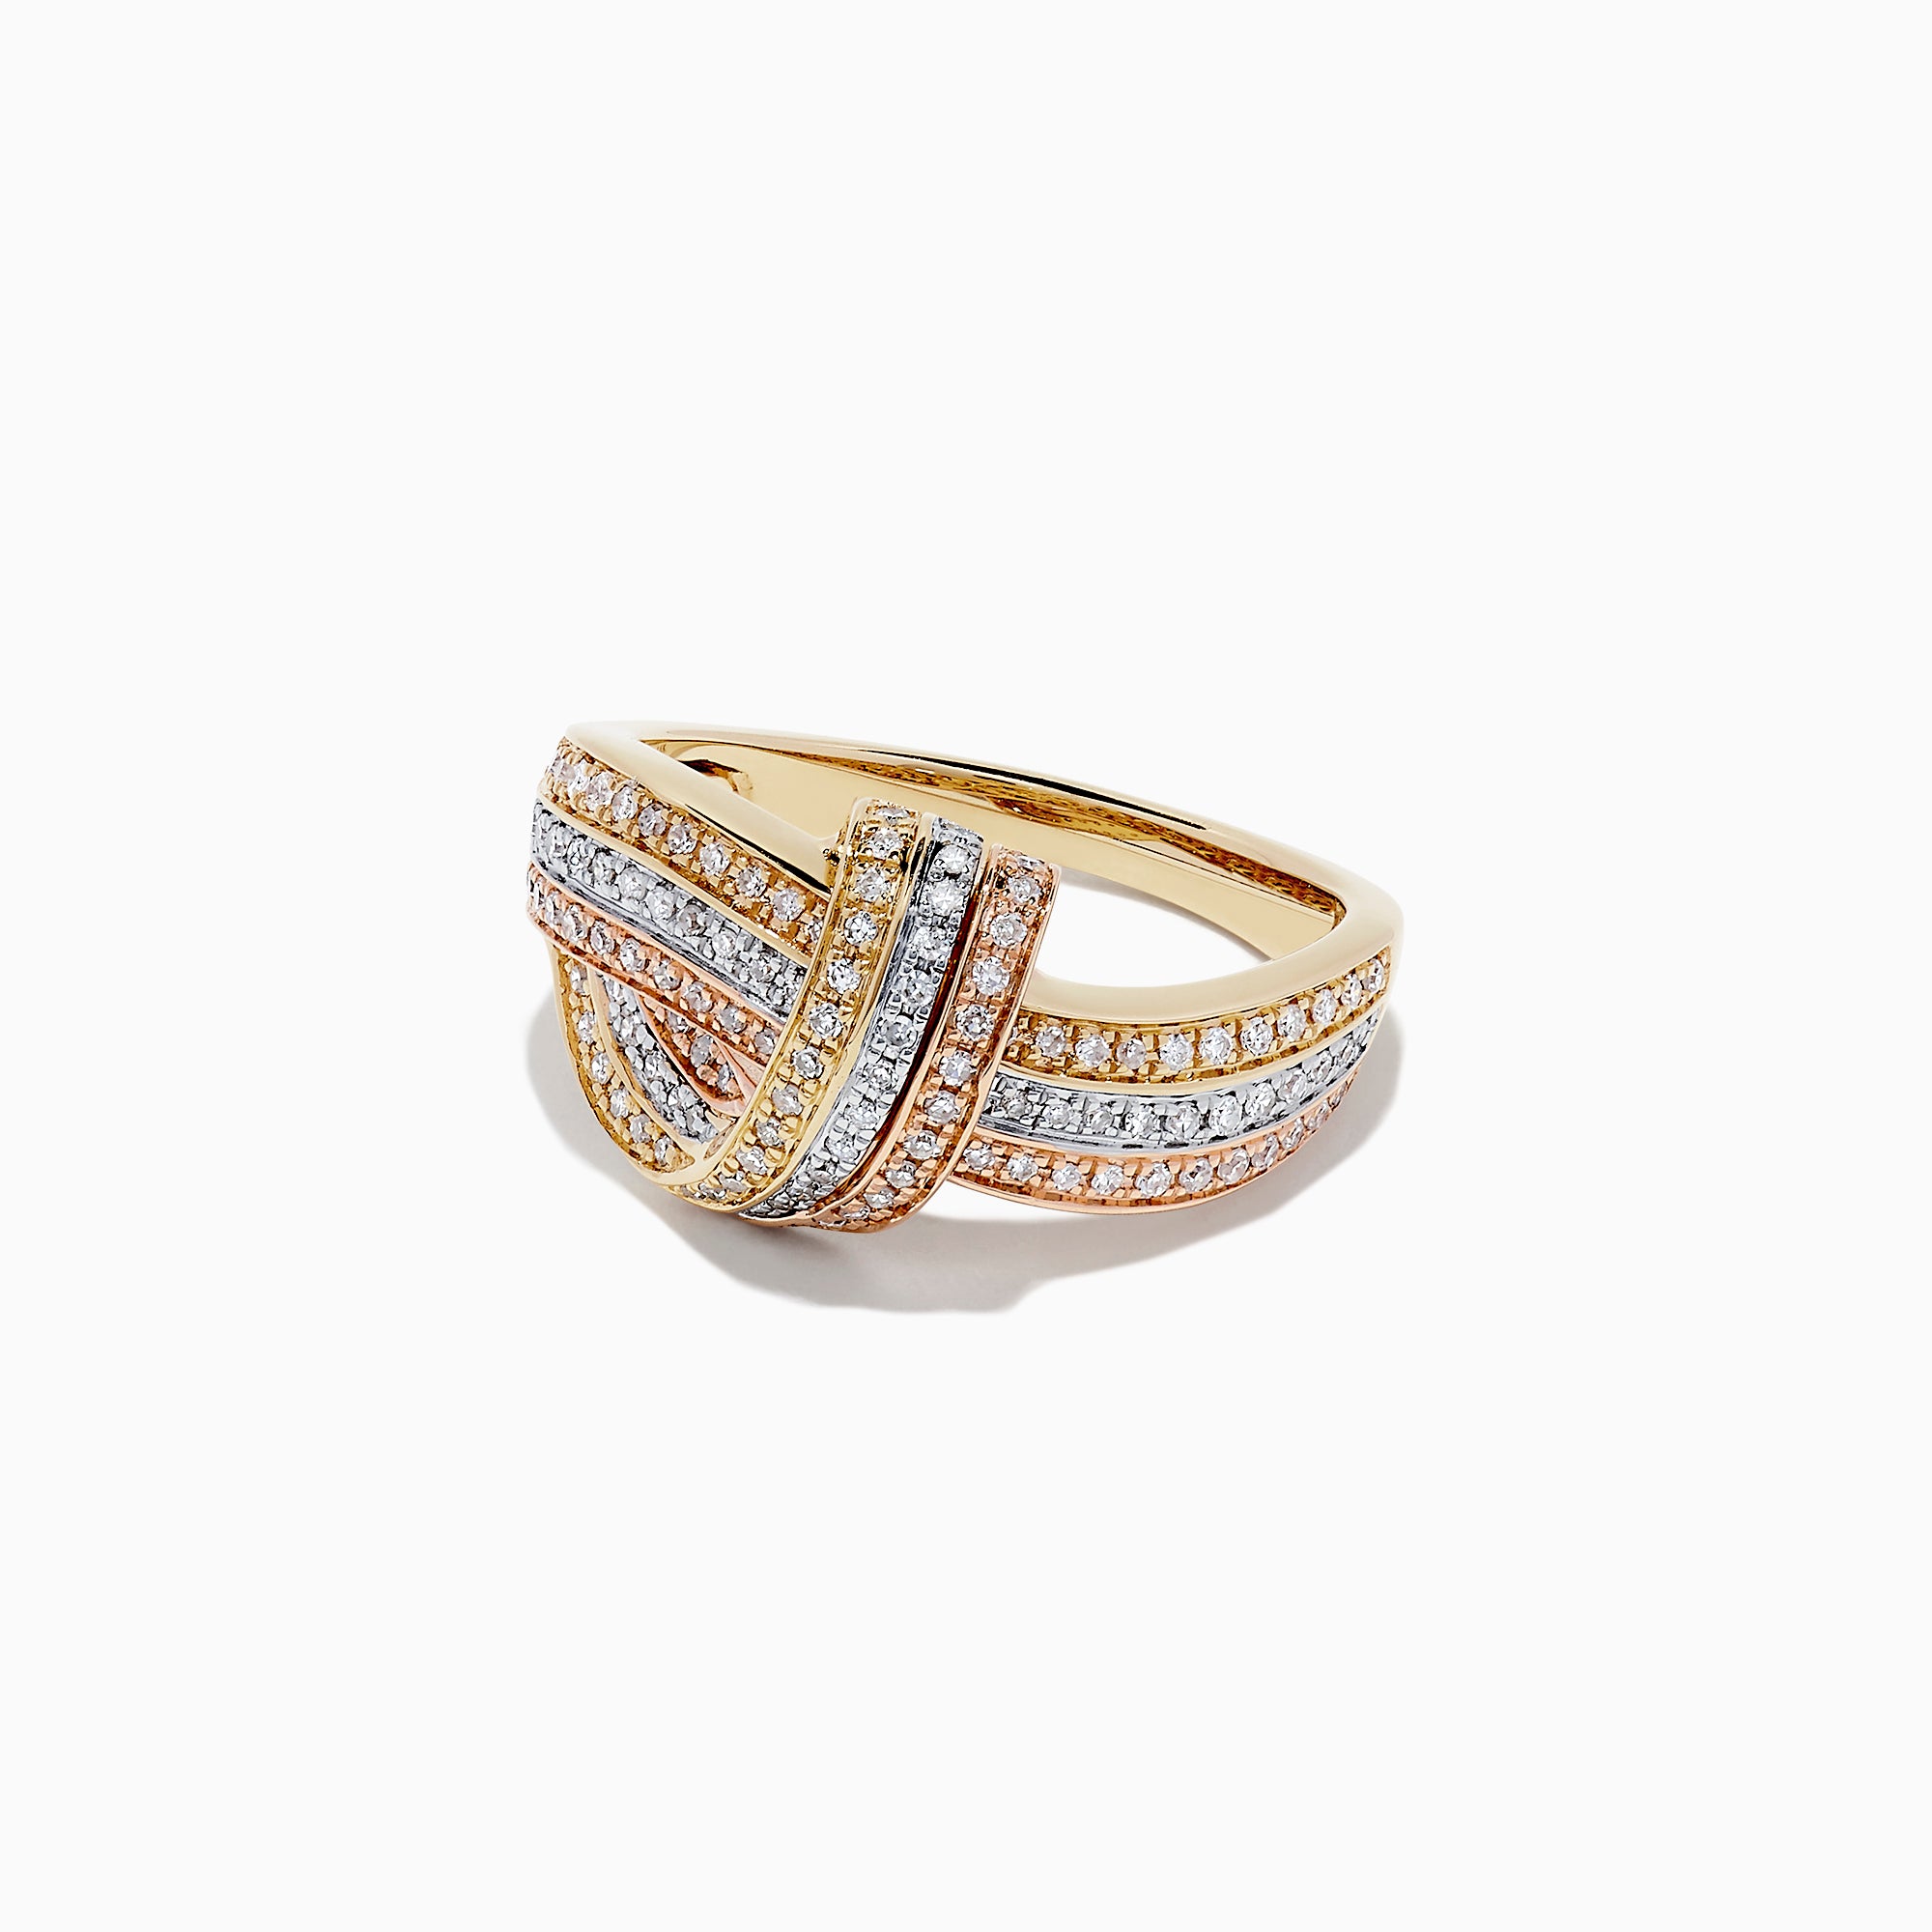 Effy Jewelry Diamond Statement Ring in 14K Yellow Gold, 0.52 tcw